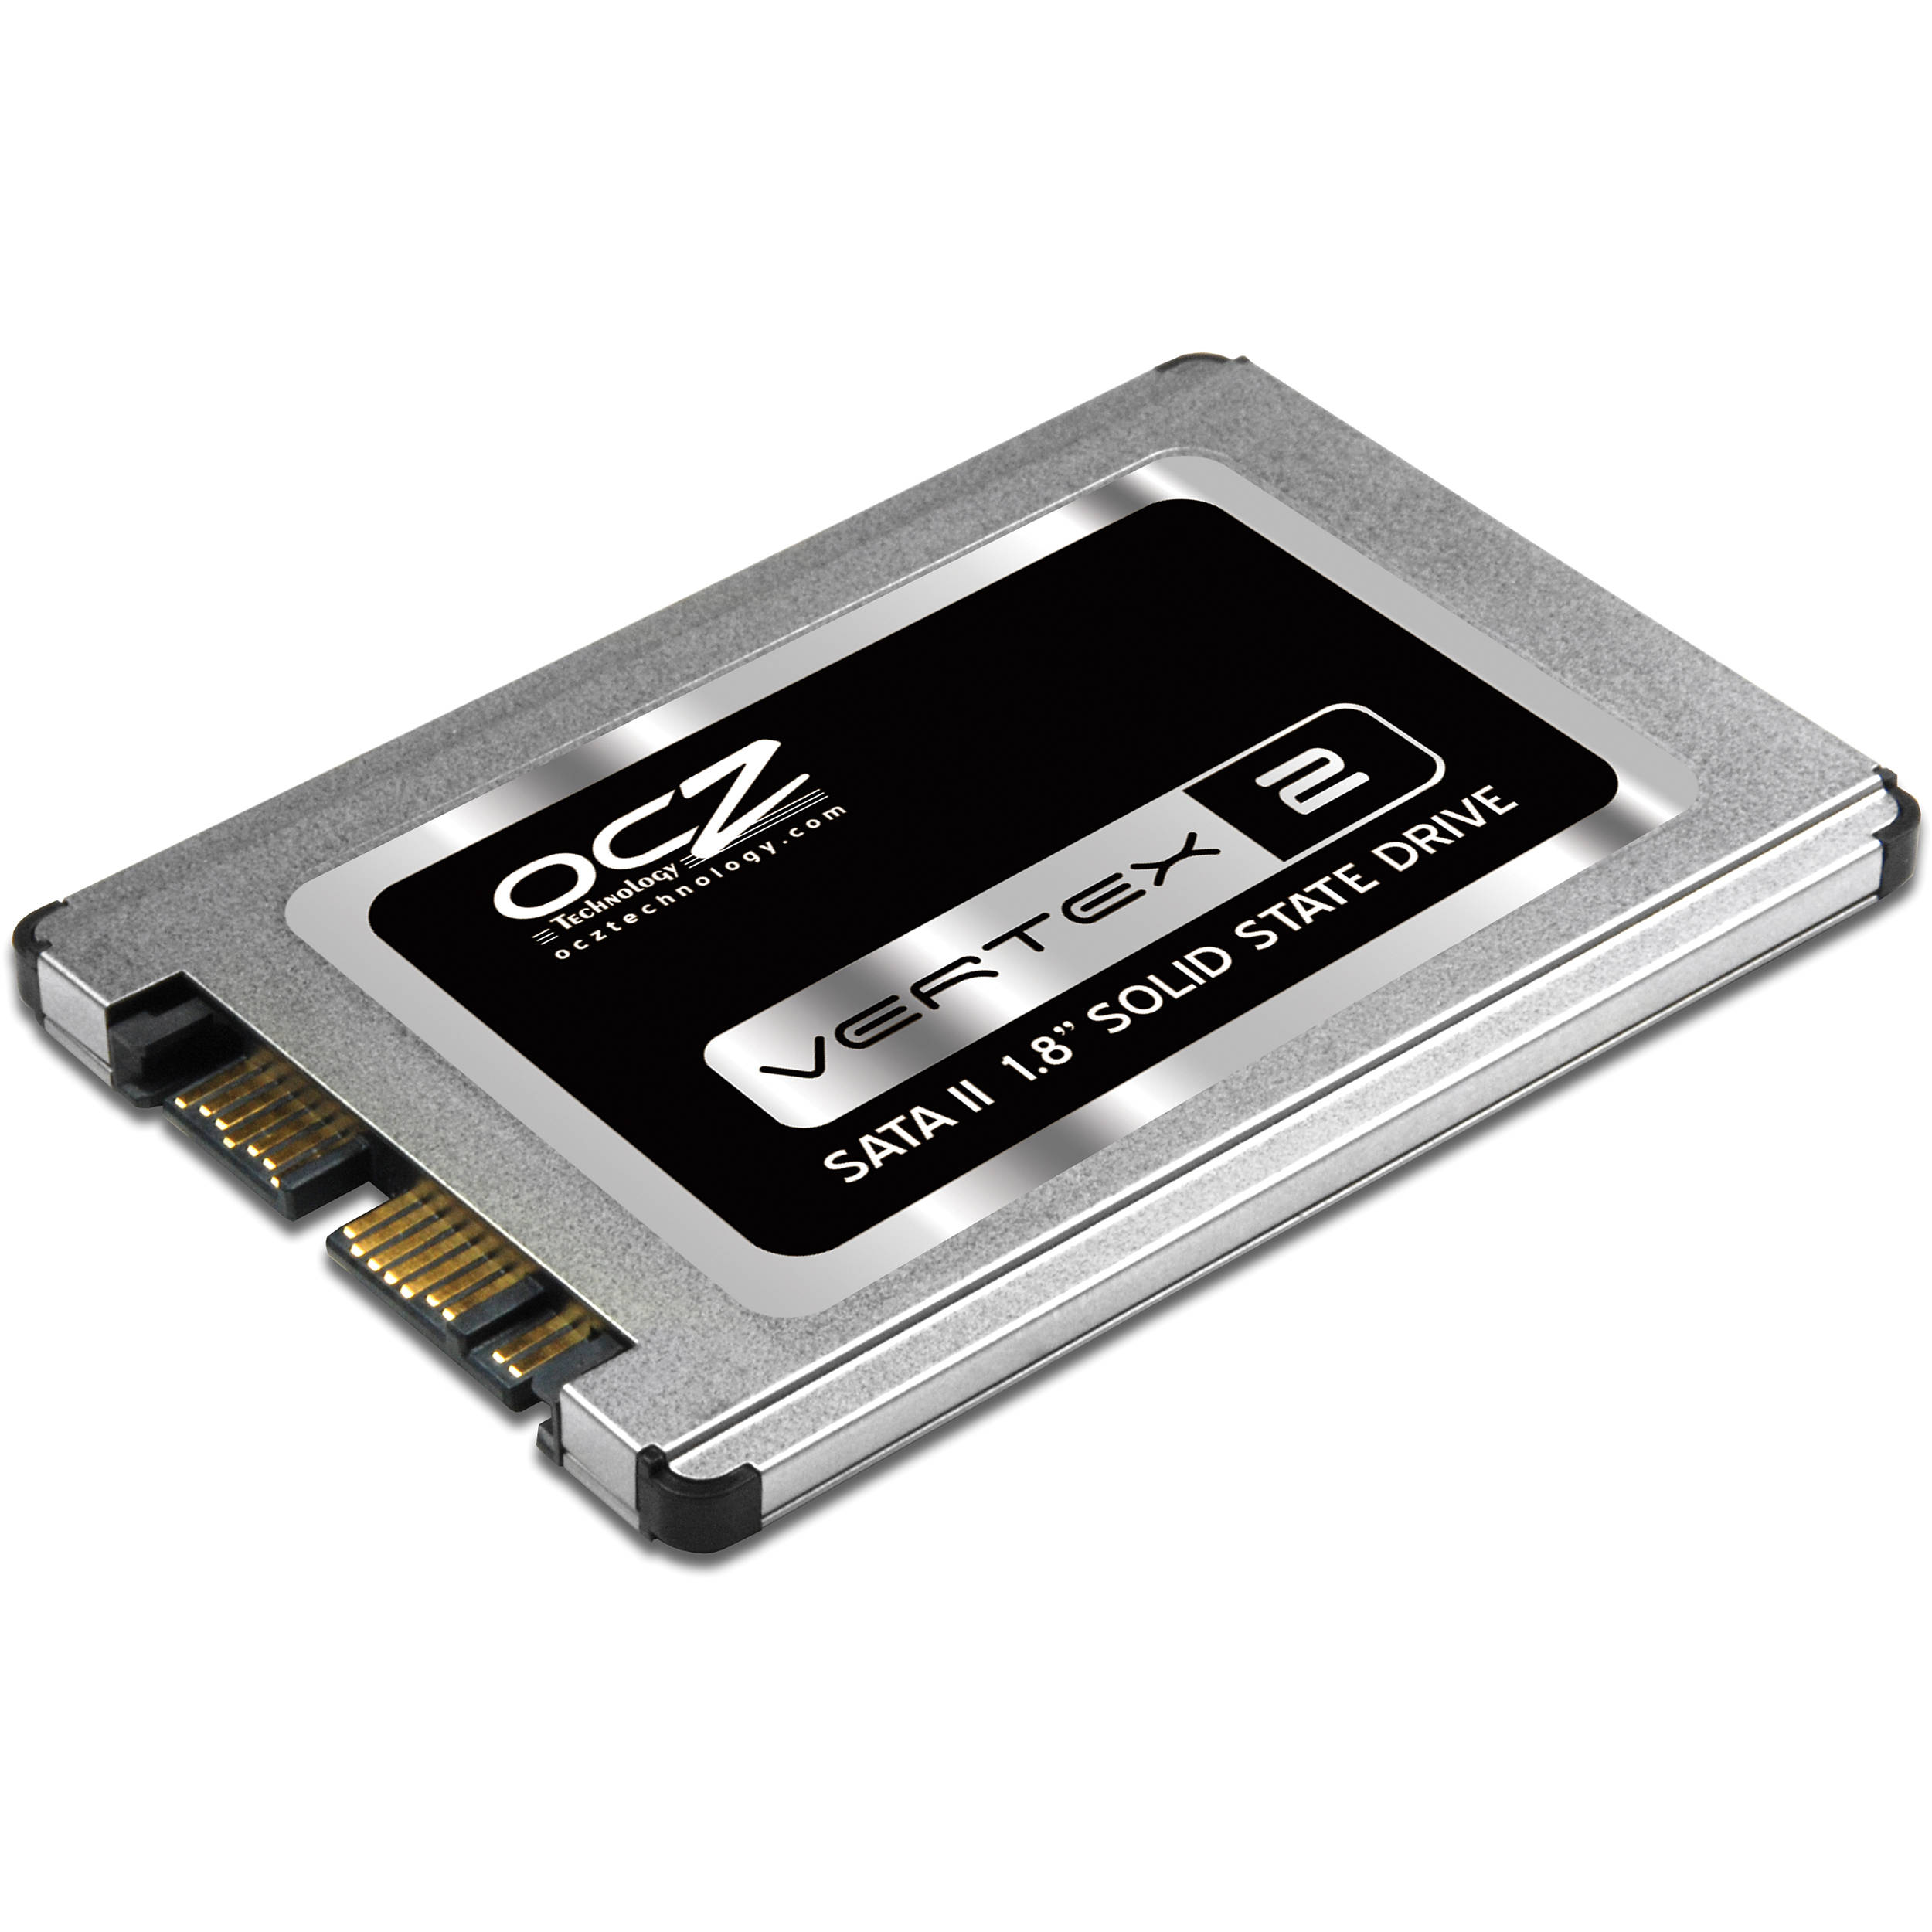 Ssd price. Твердотельный накопитель OCZ ocz3hsd1ibs1-960g. OCZ Vertex 2 40 GB. Твердотельный накопитель OCZ oczssd2-1vtxpl60g. Жесткий диск OCZ oczssd1-2vtx90g.